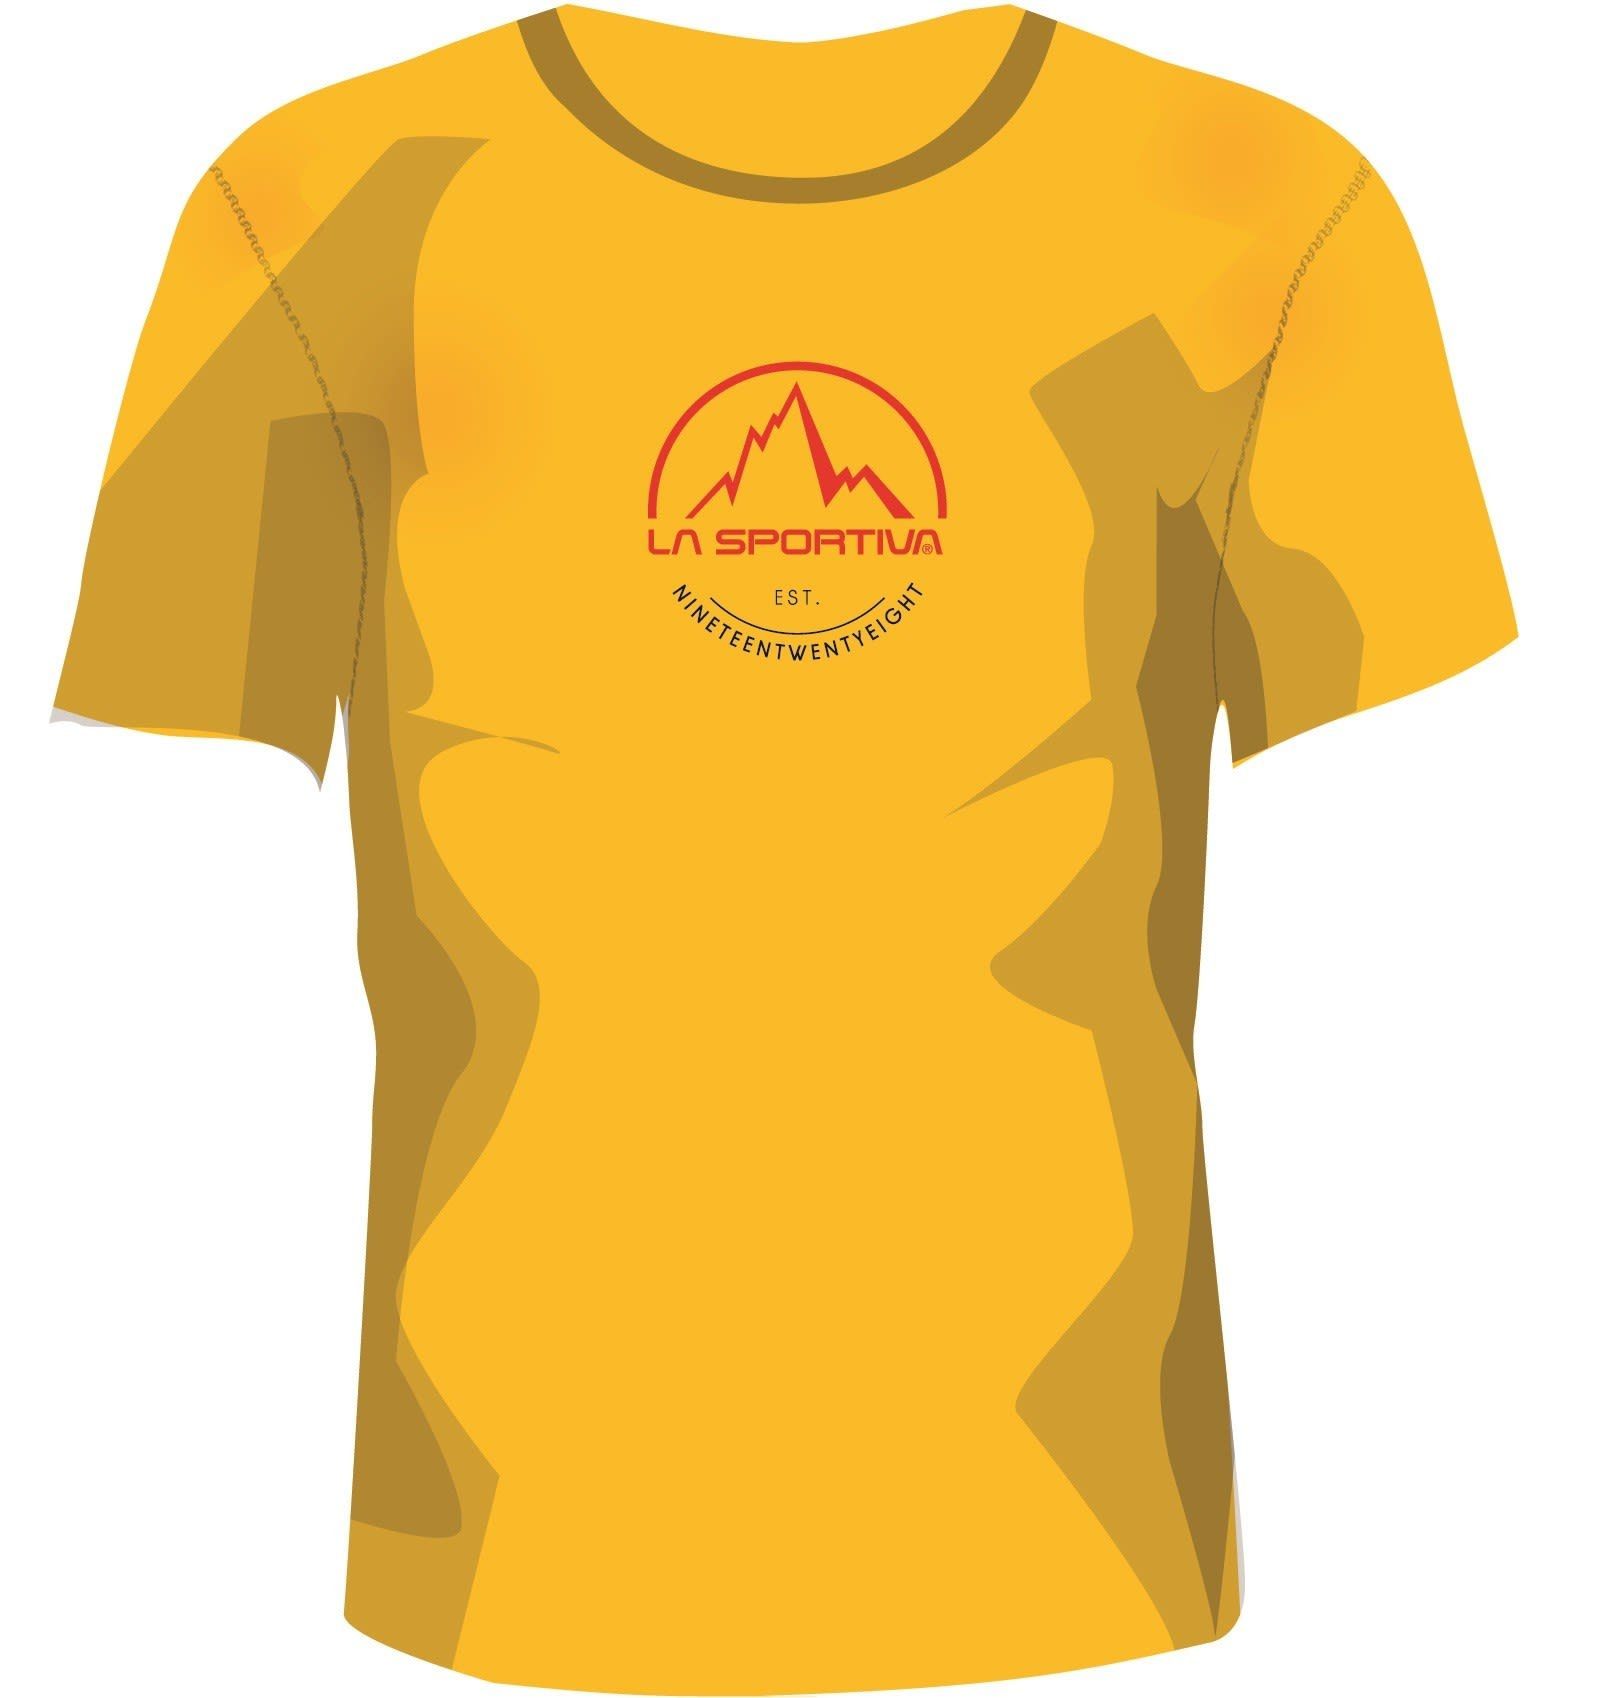 La Sportiva T-Shirt La Sportiva M Logo Tee Herren Kurzarm-Shirt Gelb